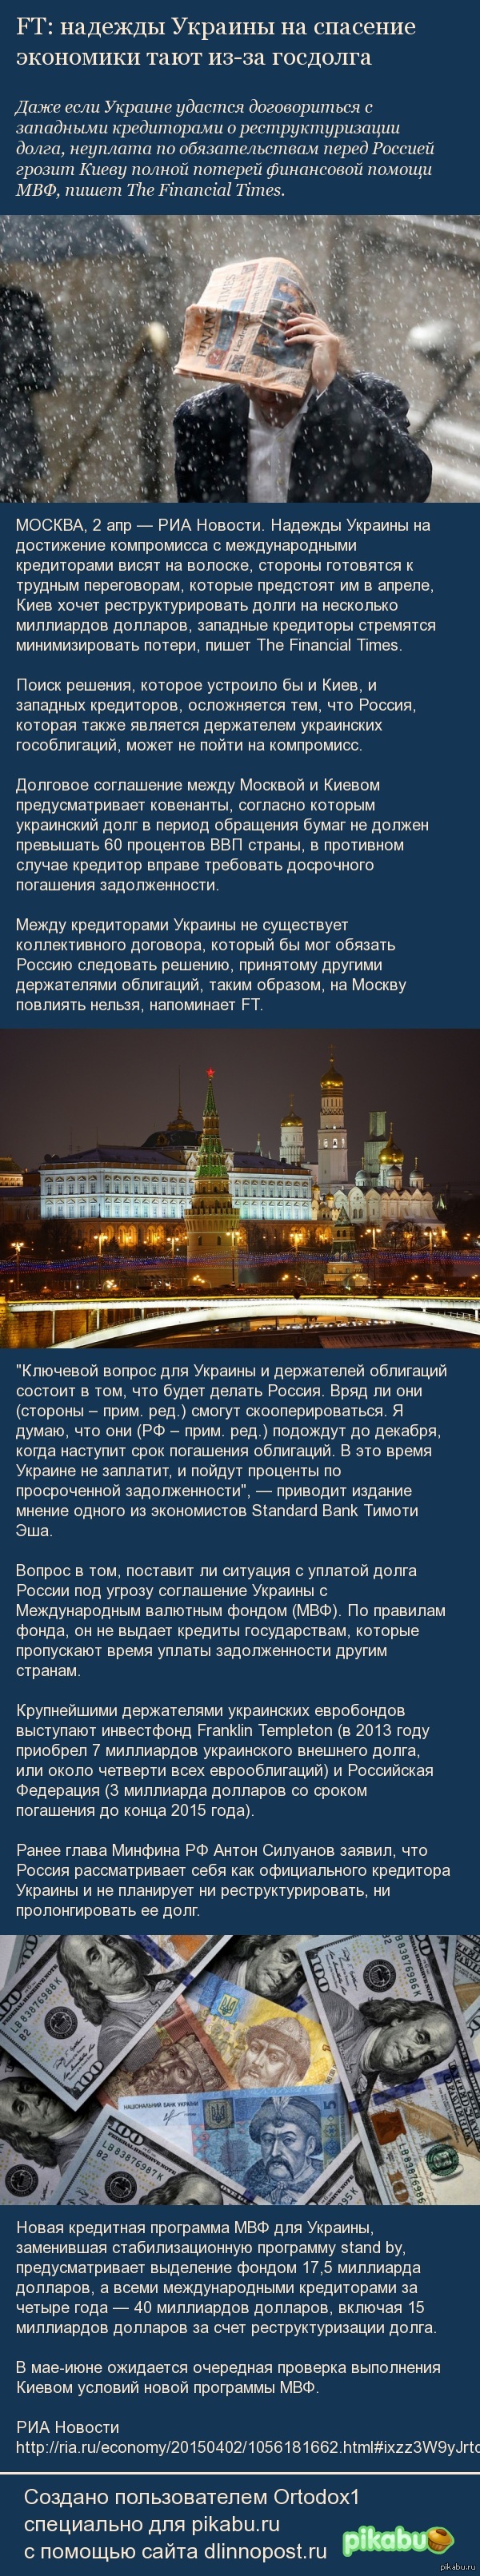 FT:       -   http://ria.ru/economy/20150402/1056181662.html